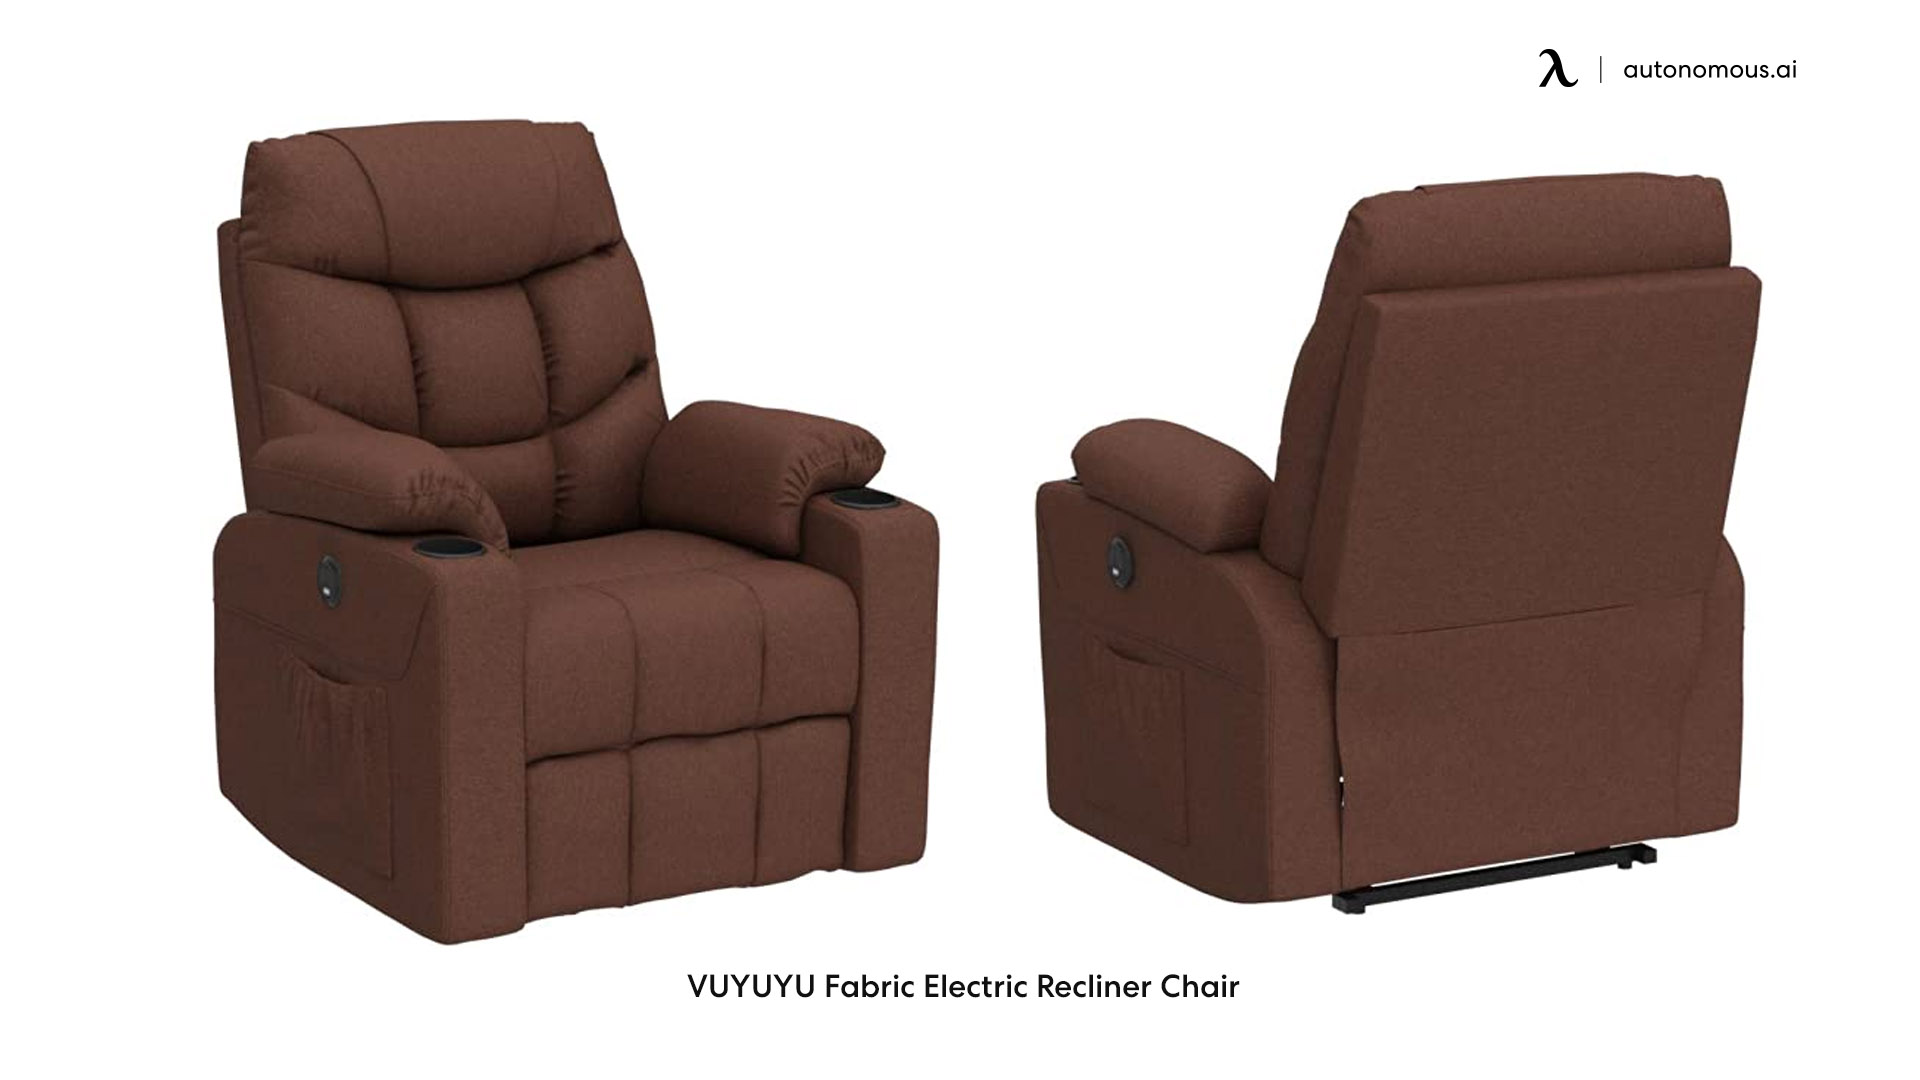 VUYUYU Fabric Electric Recliner Chair